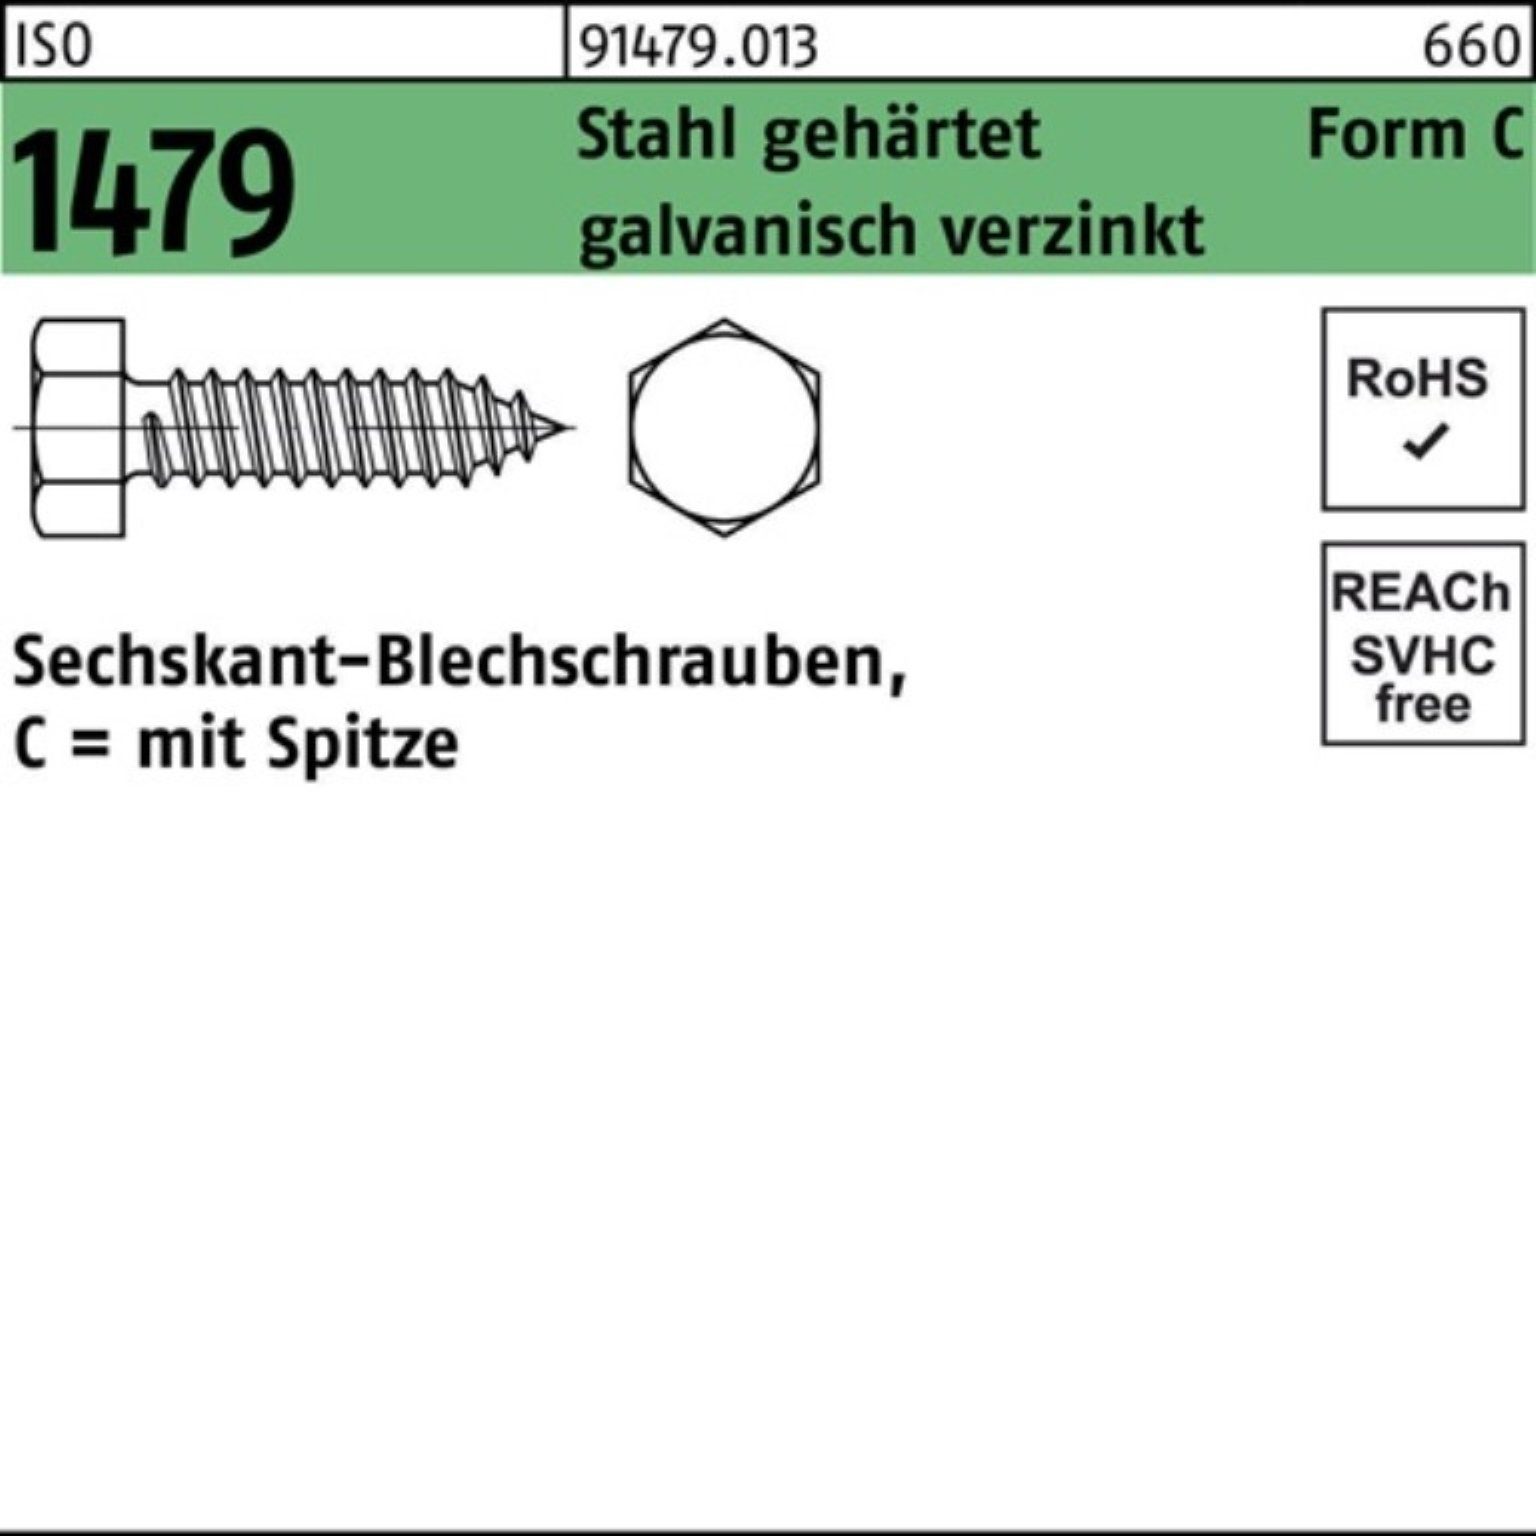 Stahl g Pack Blechschraube C gehärtet Reyher ISO Blechschraube 8x80 200er Spitze/6-kt 1479